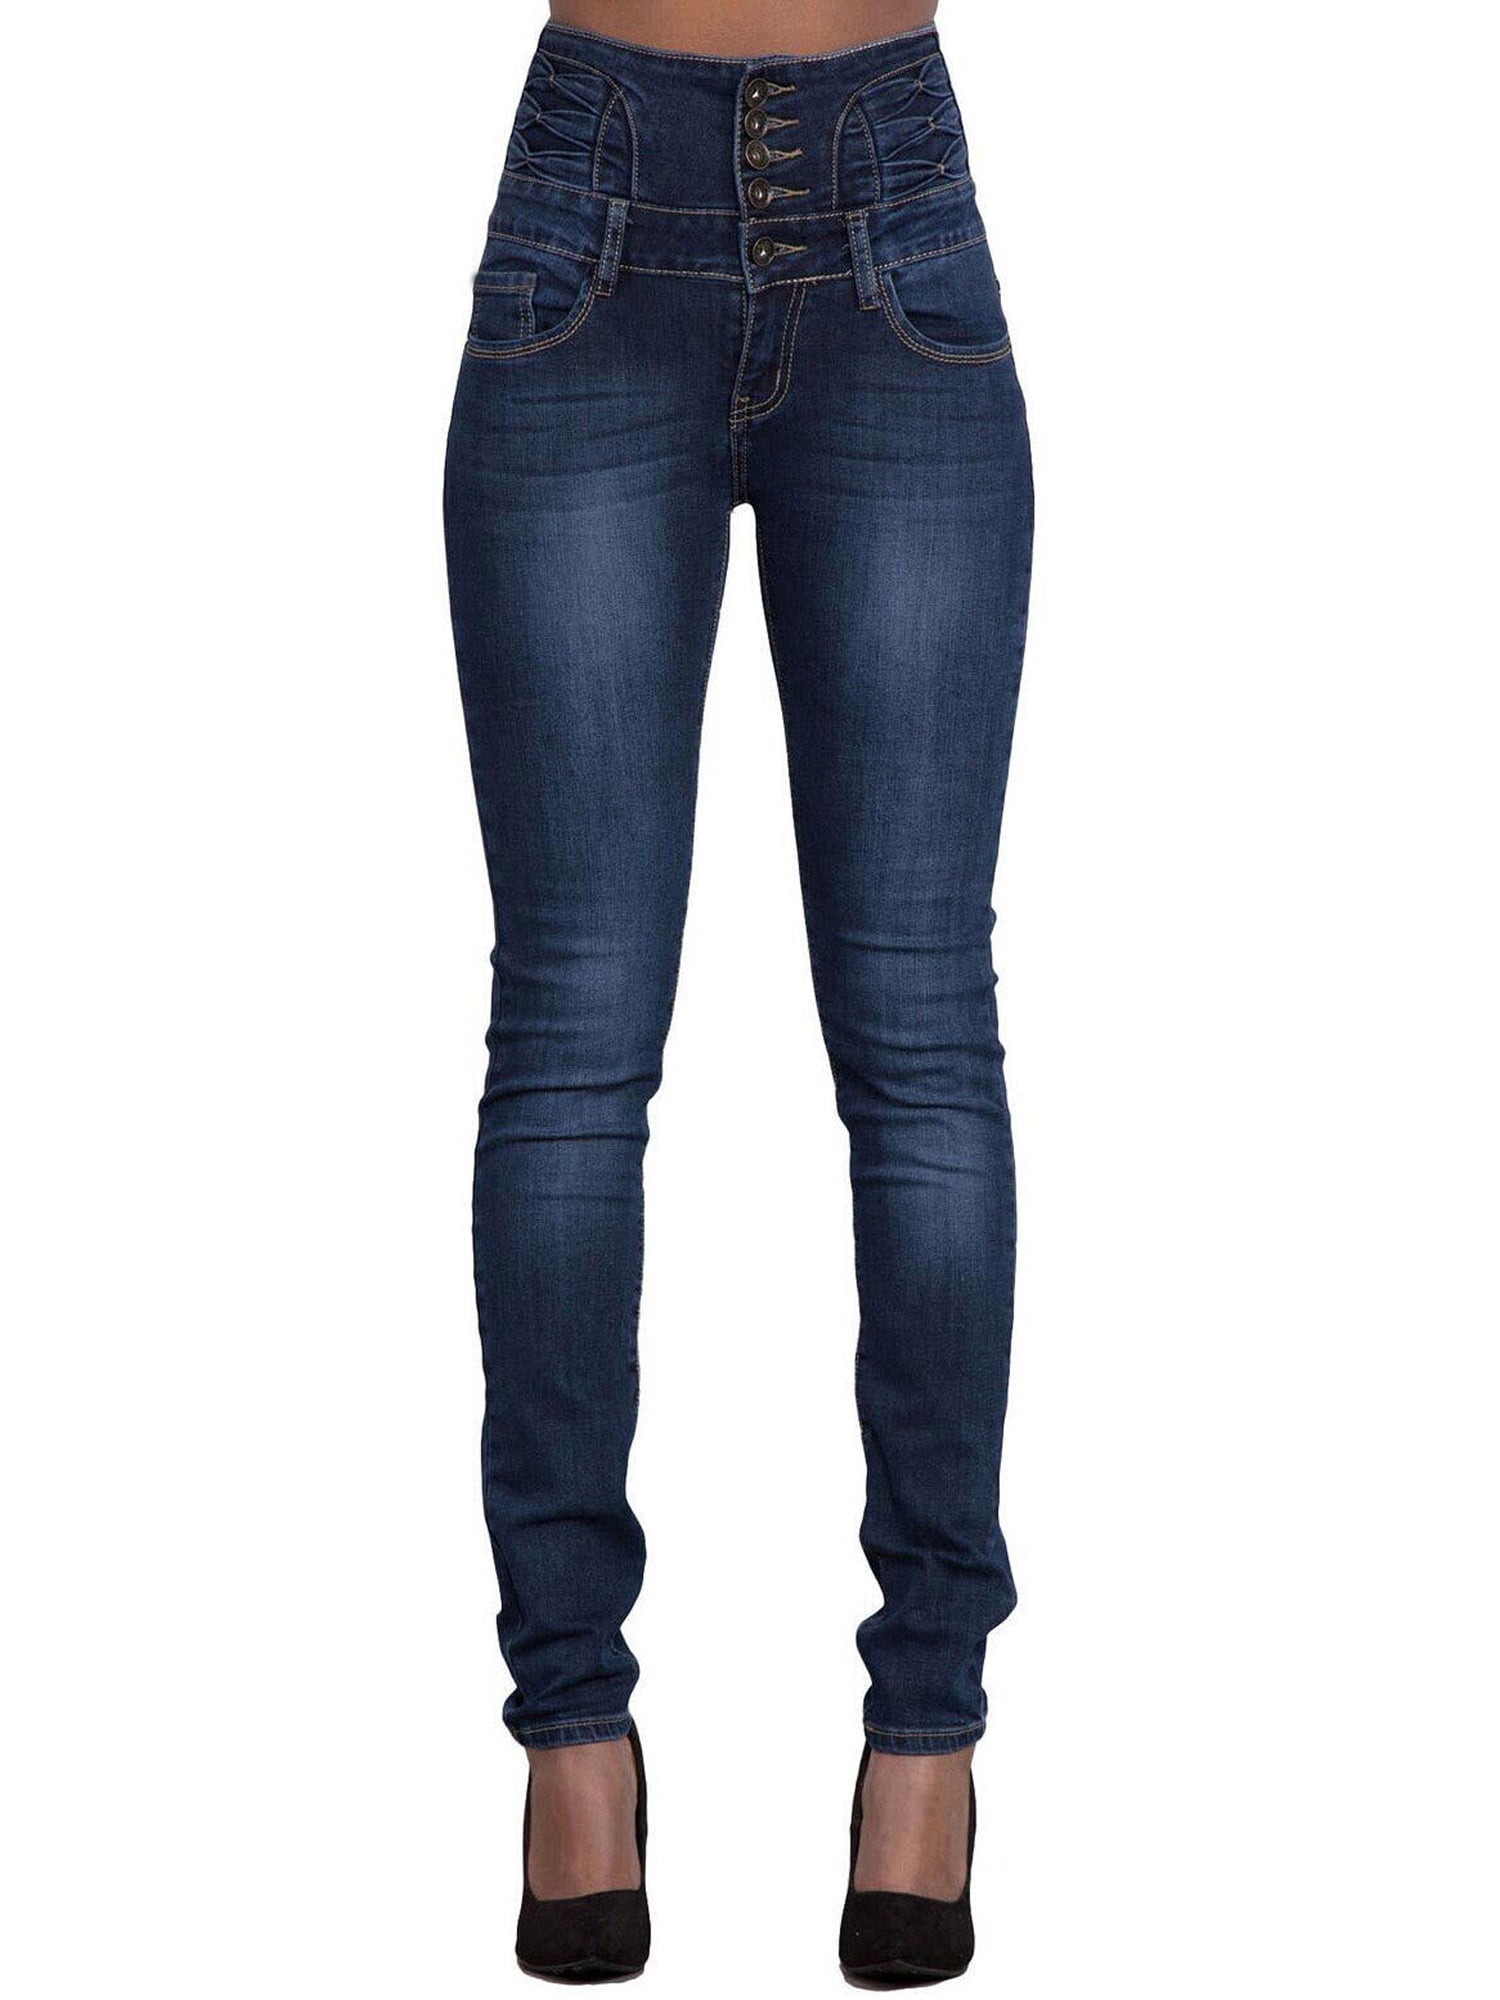 Lady High Waist Skinny Pencil Denim Jeans Stretch Slim Fitness Pants Trouser USA 